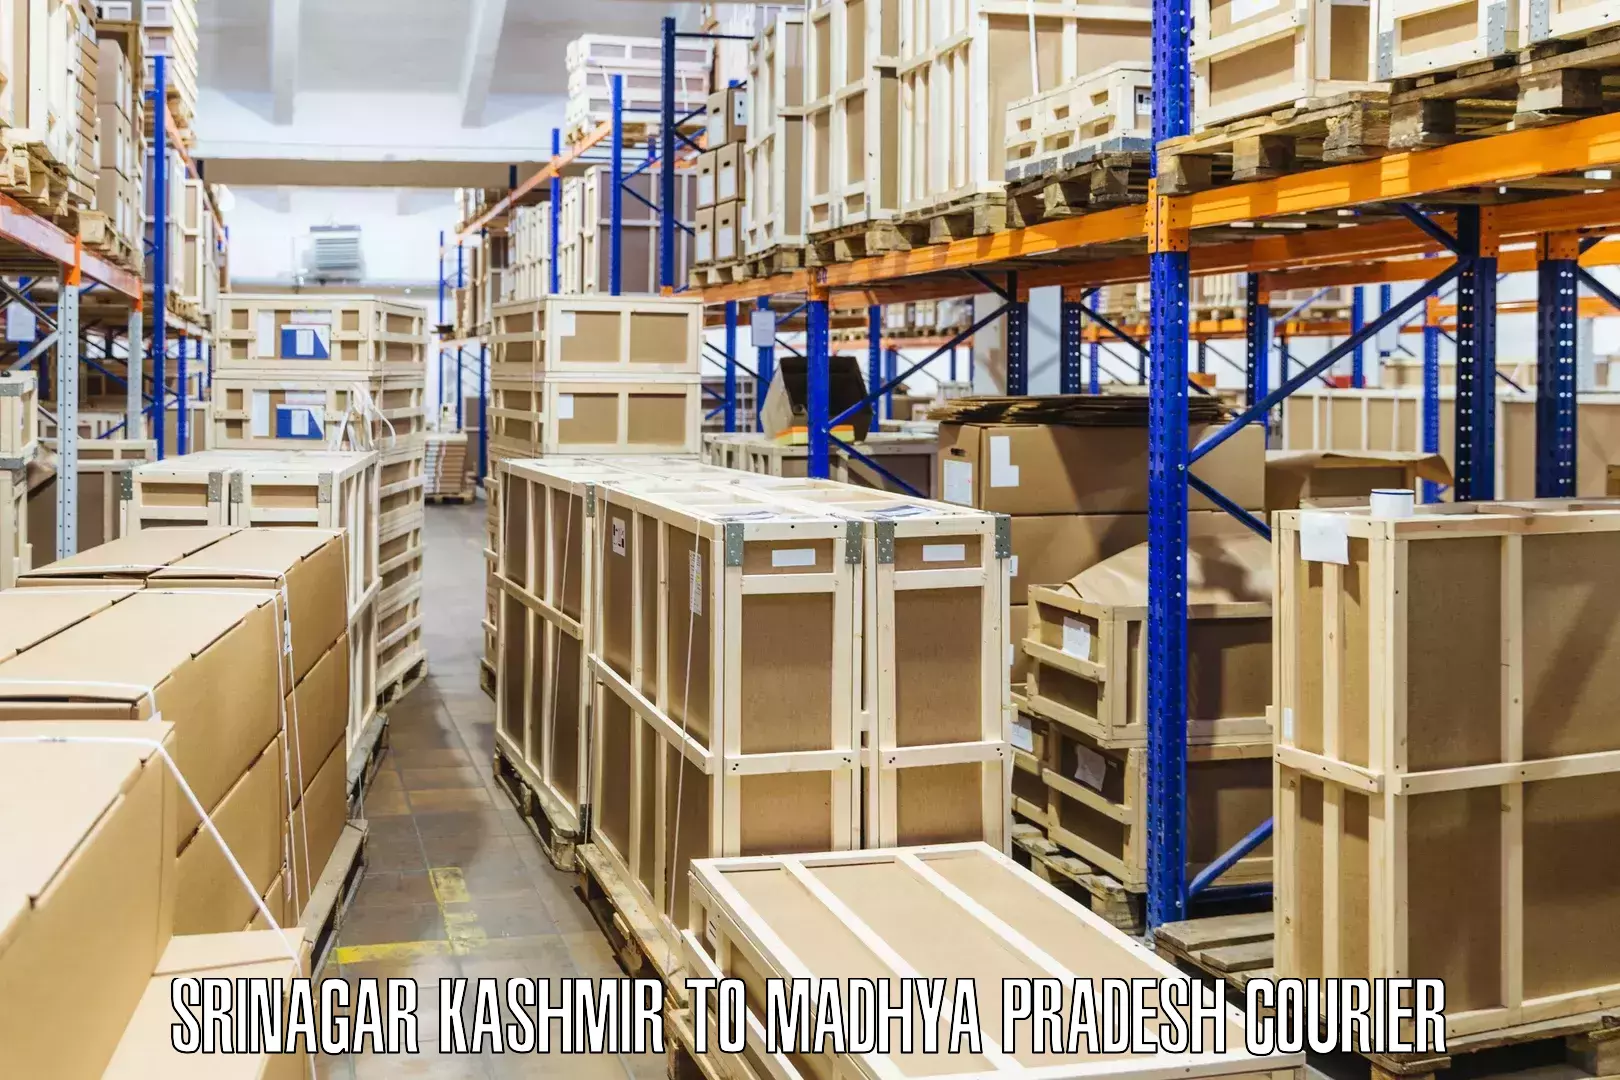 User-friendly delivery service Srinagar Kashmir to Indore